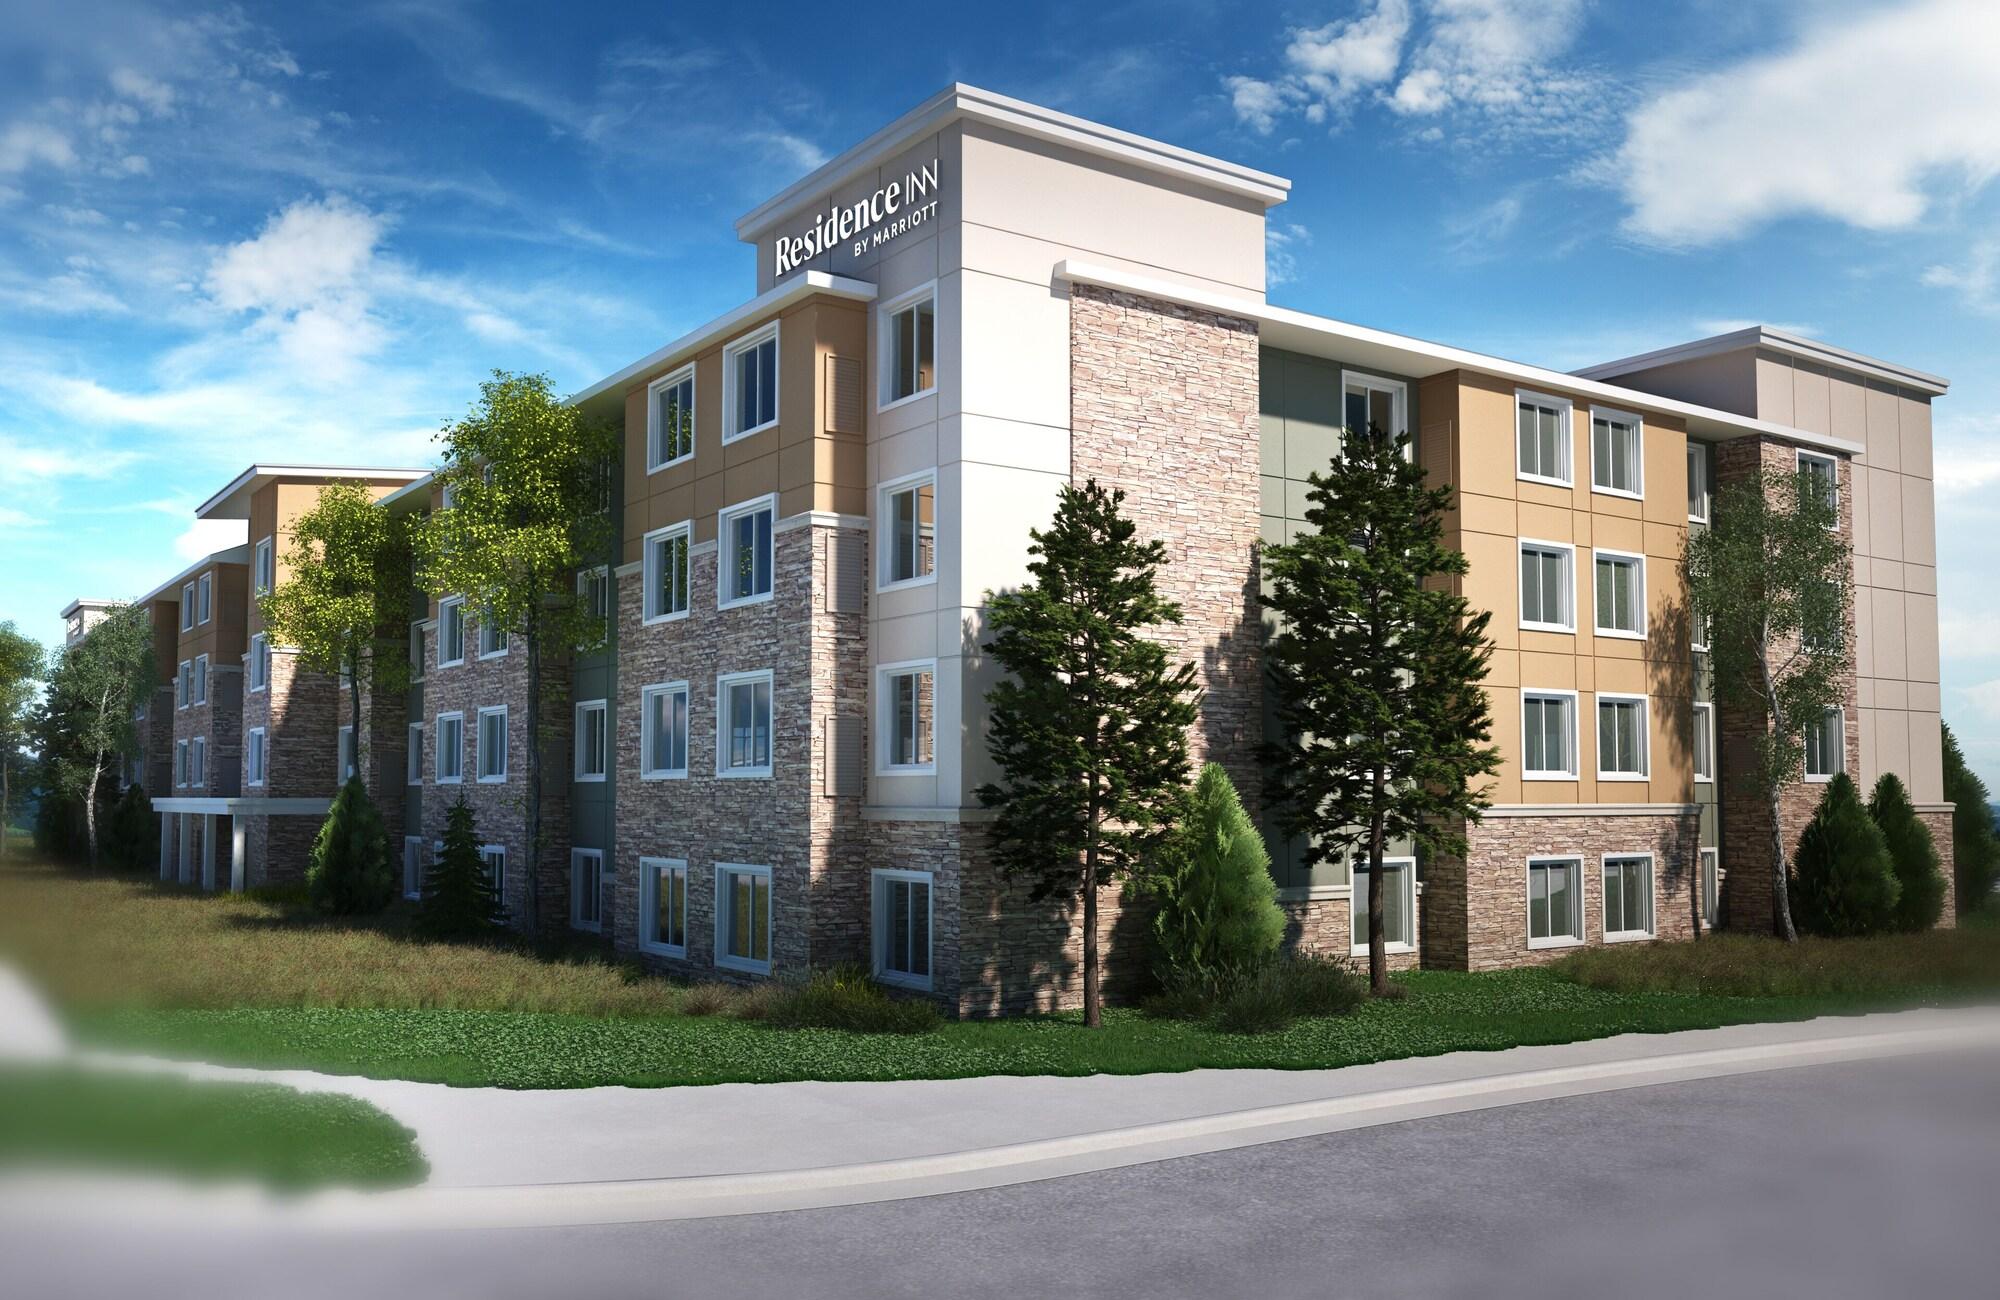 Residence Inn by Marriott Colorado Springs First & Main image